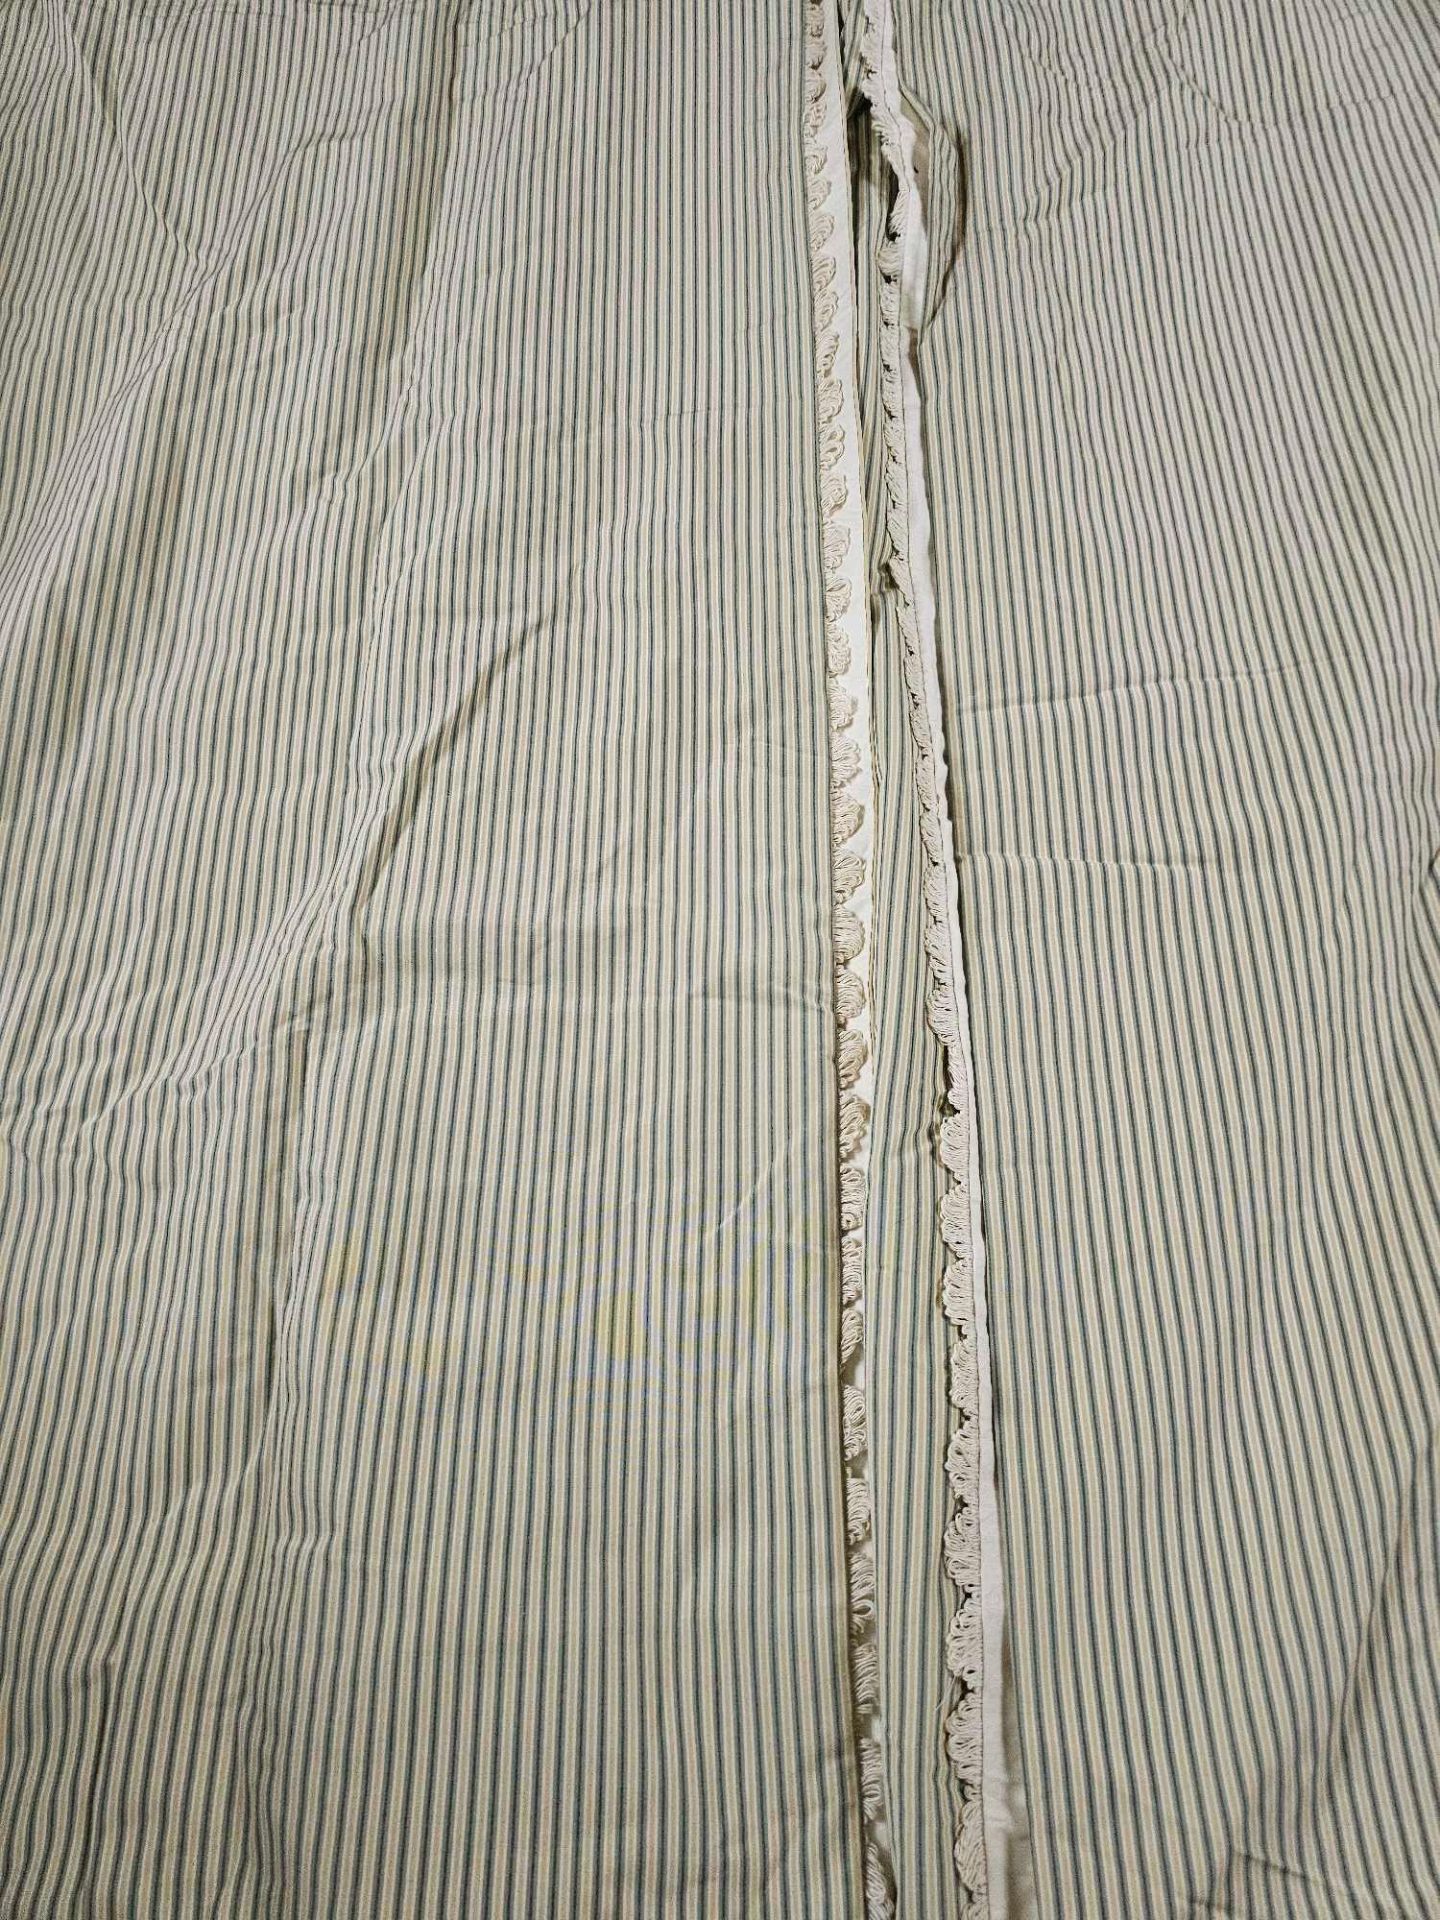 4 X Panels Of Manuel Canovas Fabrics (France) Cotton Mix Ottavio Pattern Green And Gold Striped Each - Image 2 of 4